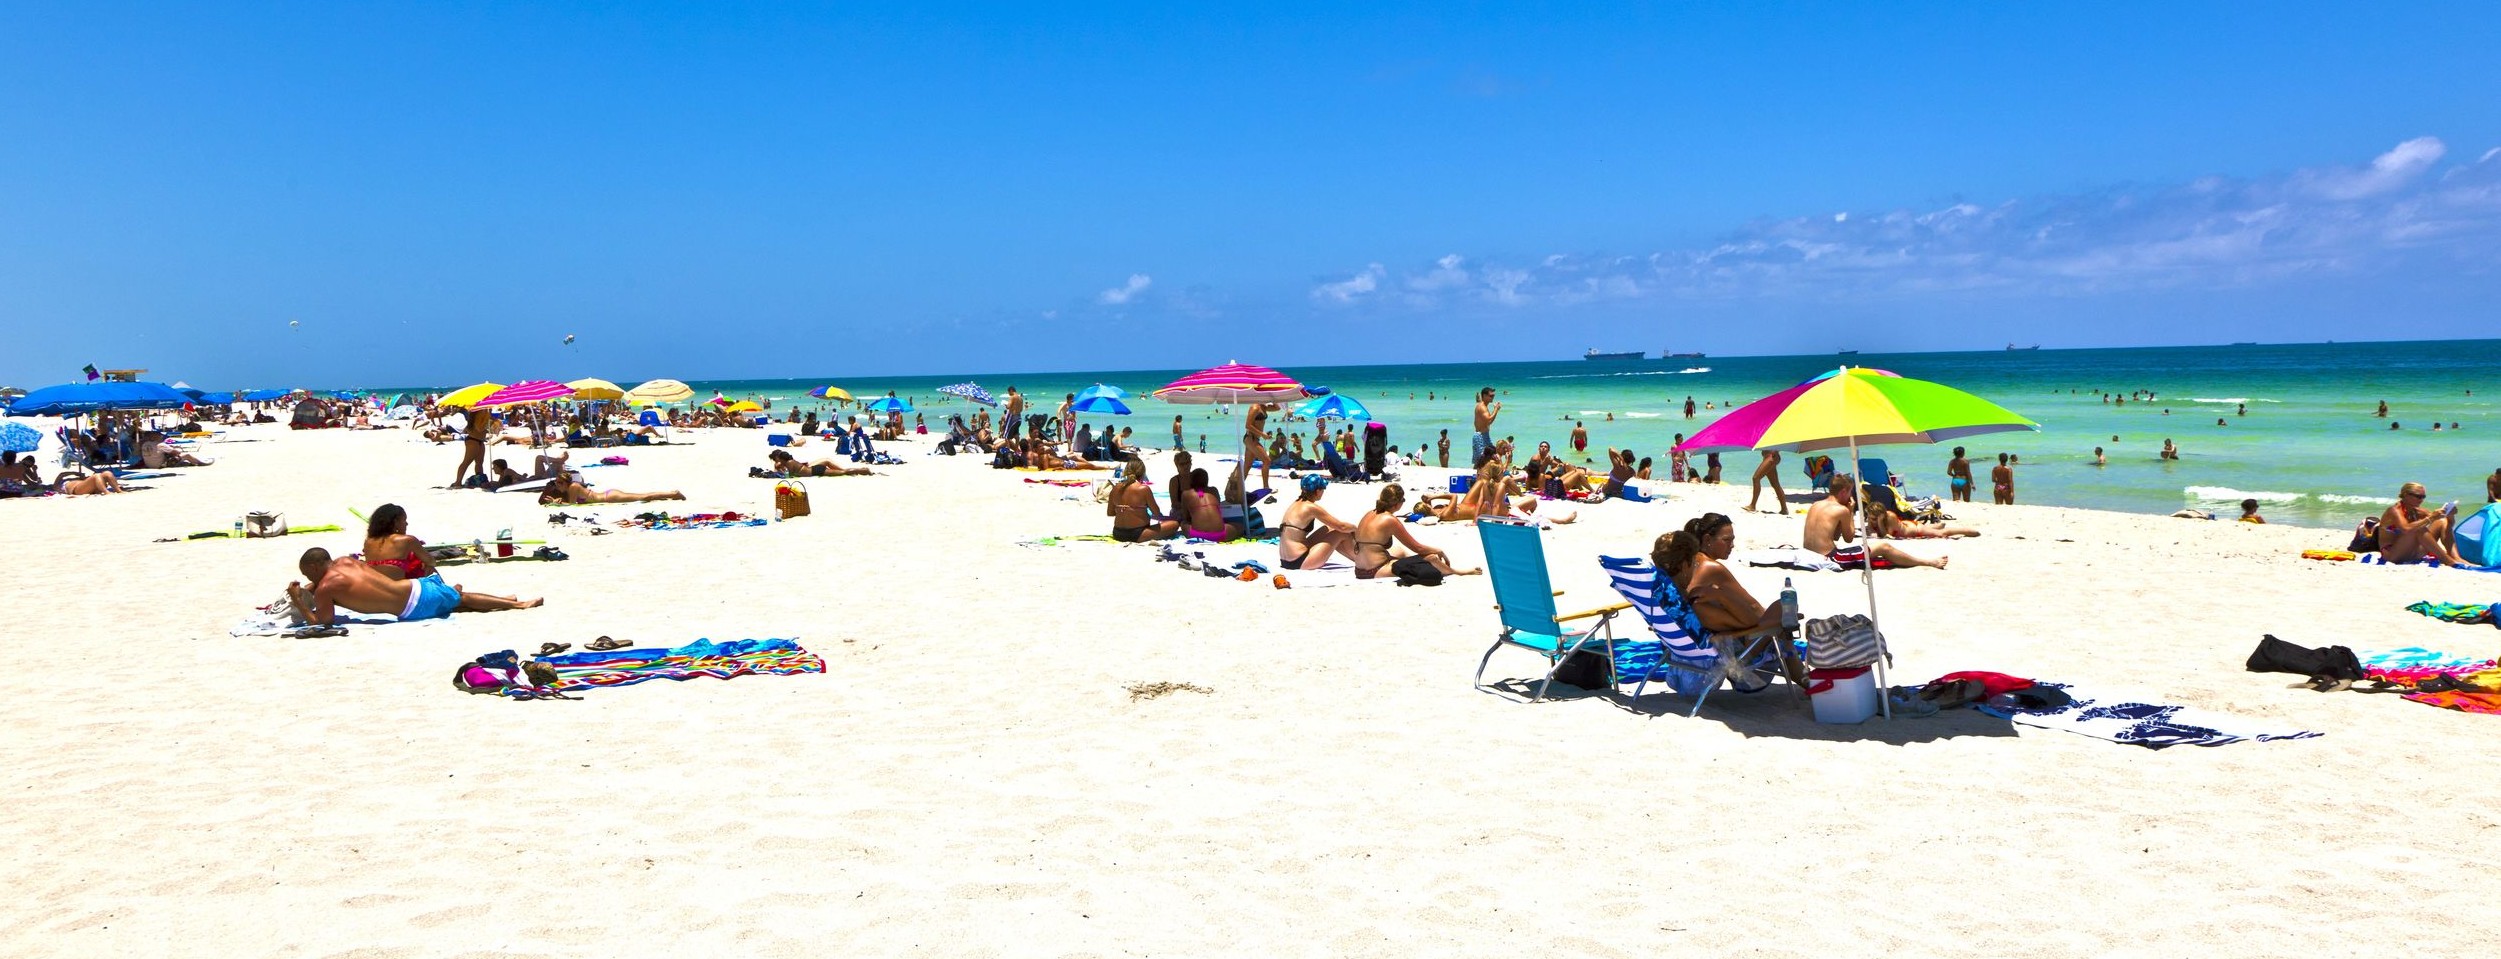 Miami Beach with umbrellas